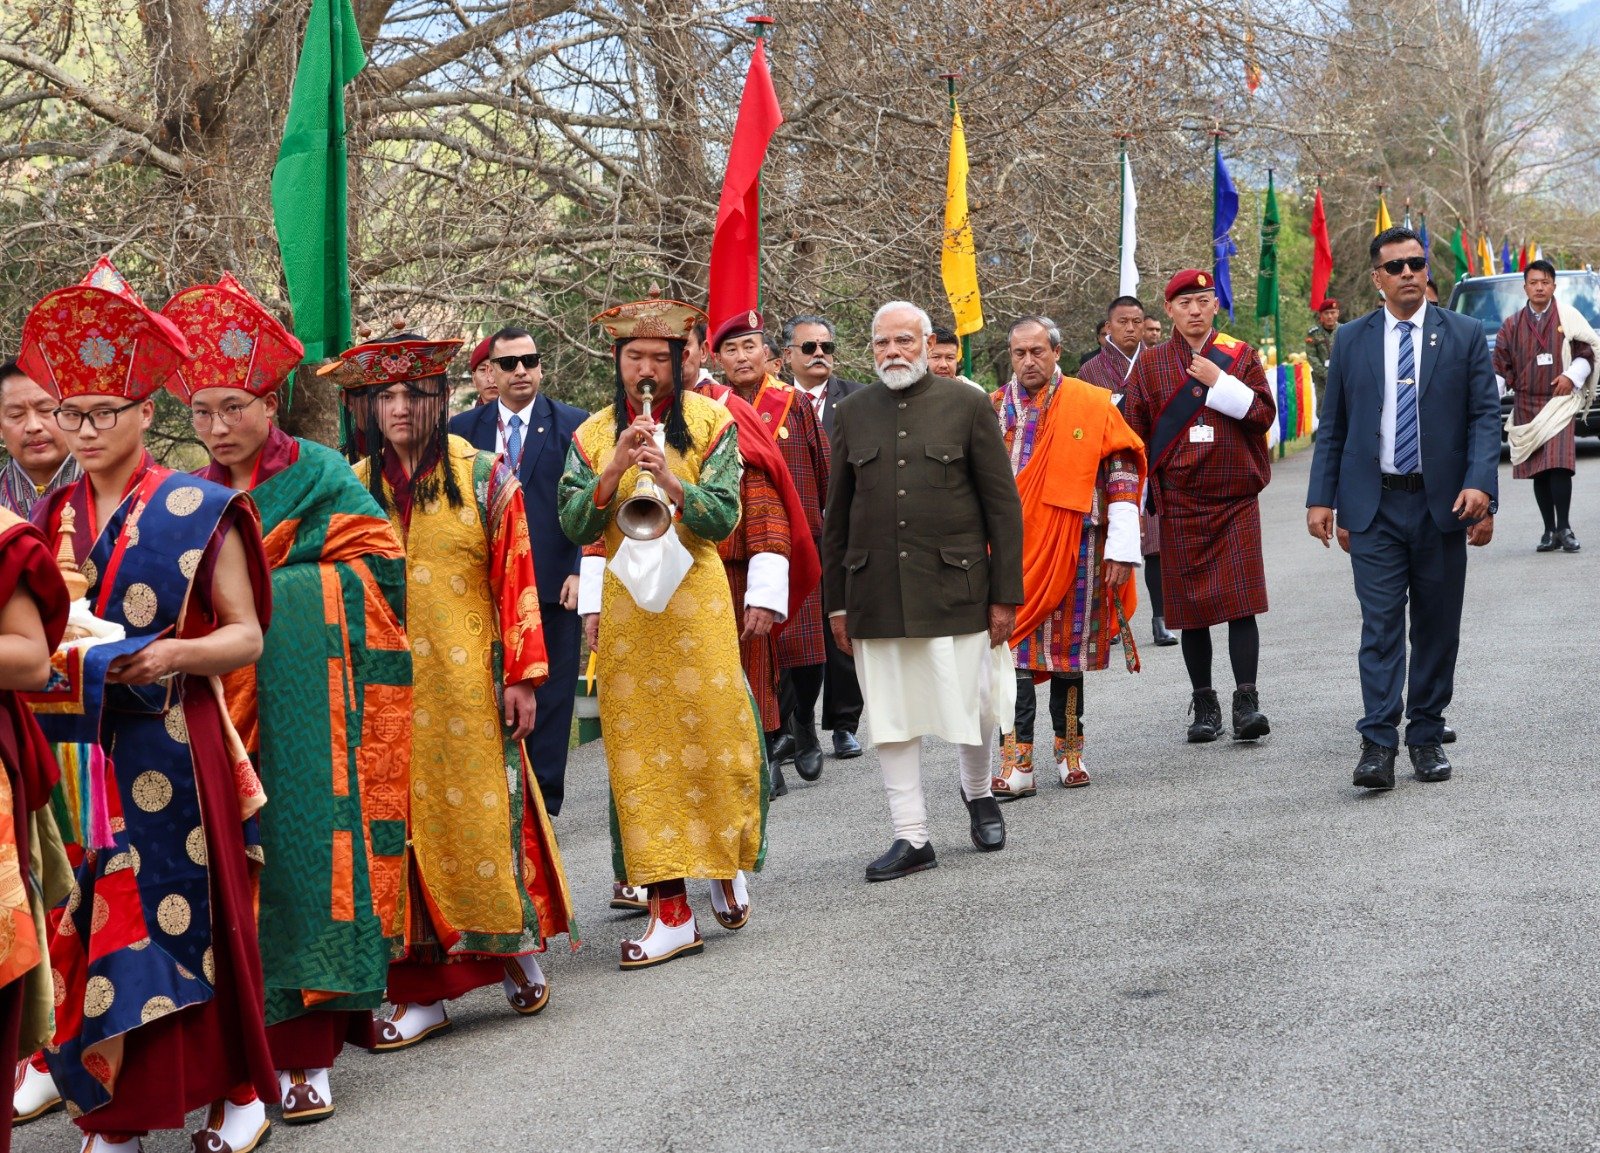 PM Modi conferred with the Order of the Druk Gyalpo